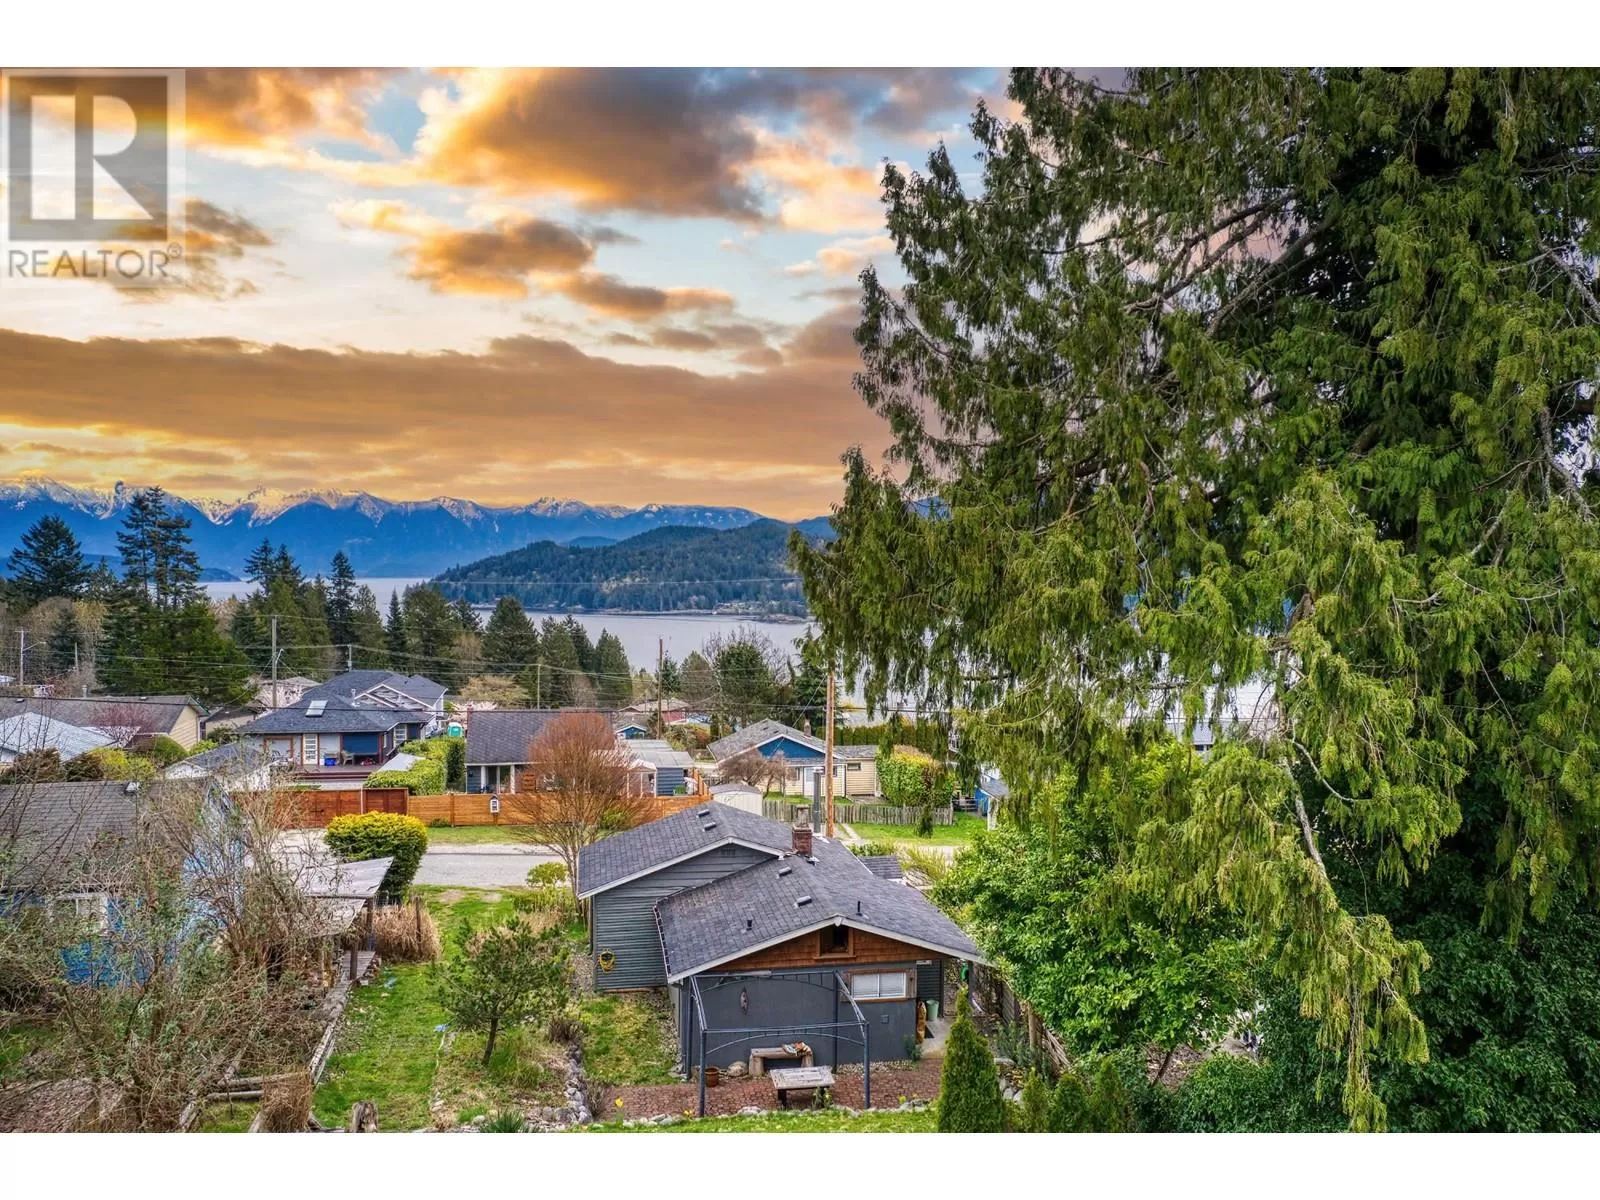 House for rent: 638/640 Wyngaert Road, Gibsons, British Columbia V0N 1V9